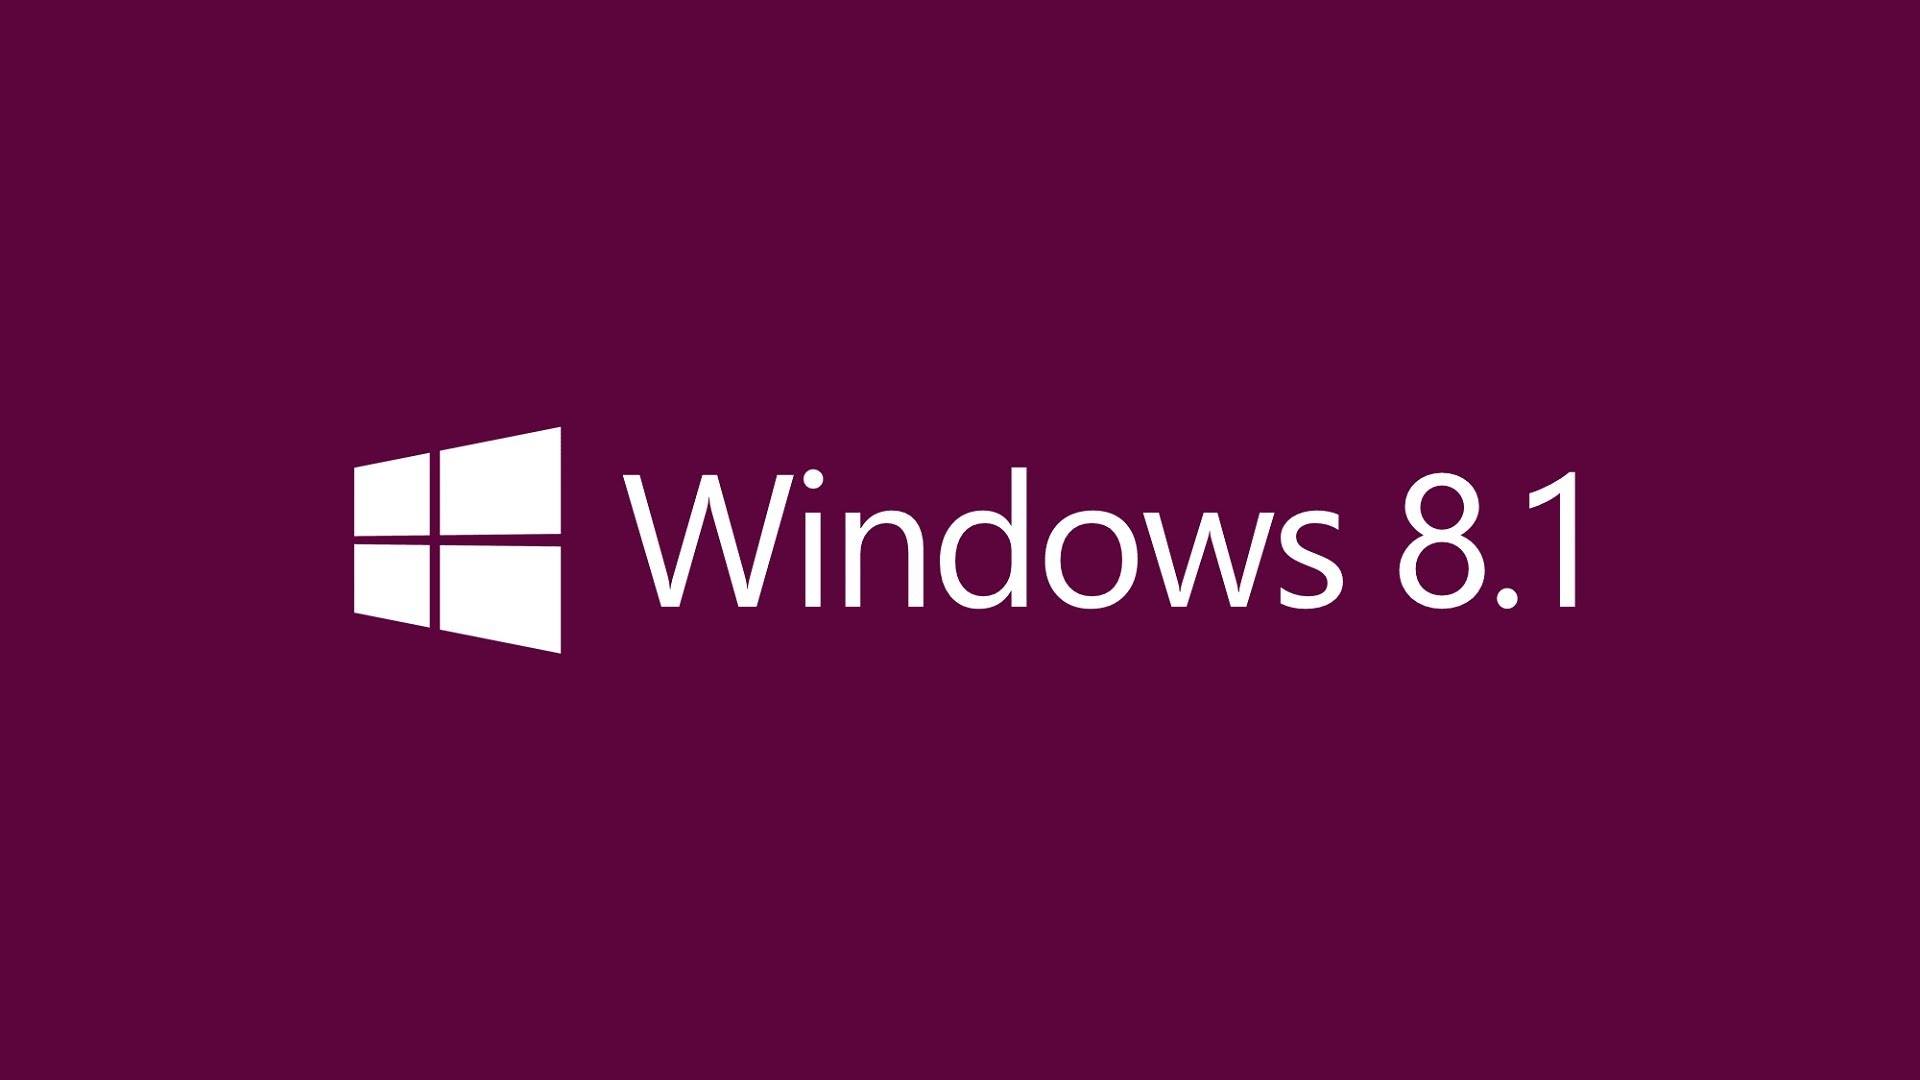 Windows 81 HD Wallpapers Download 1920x1080